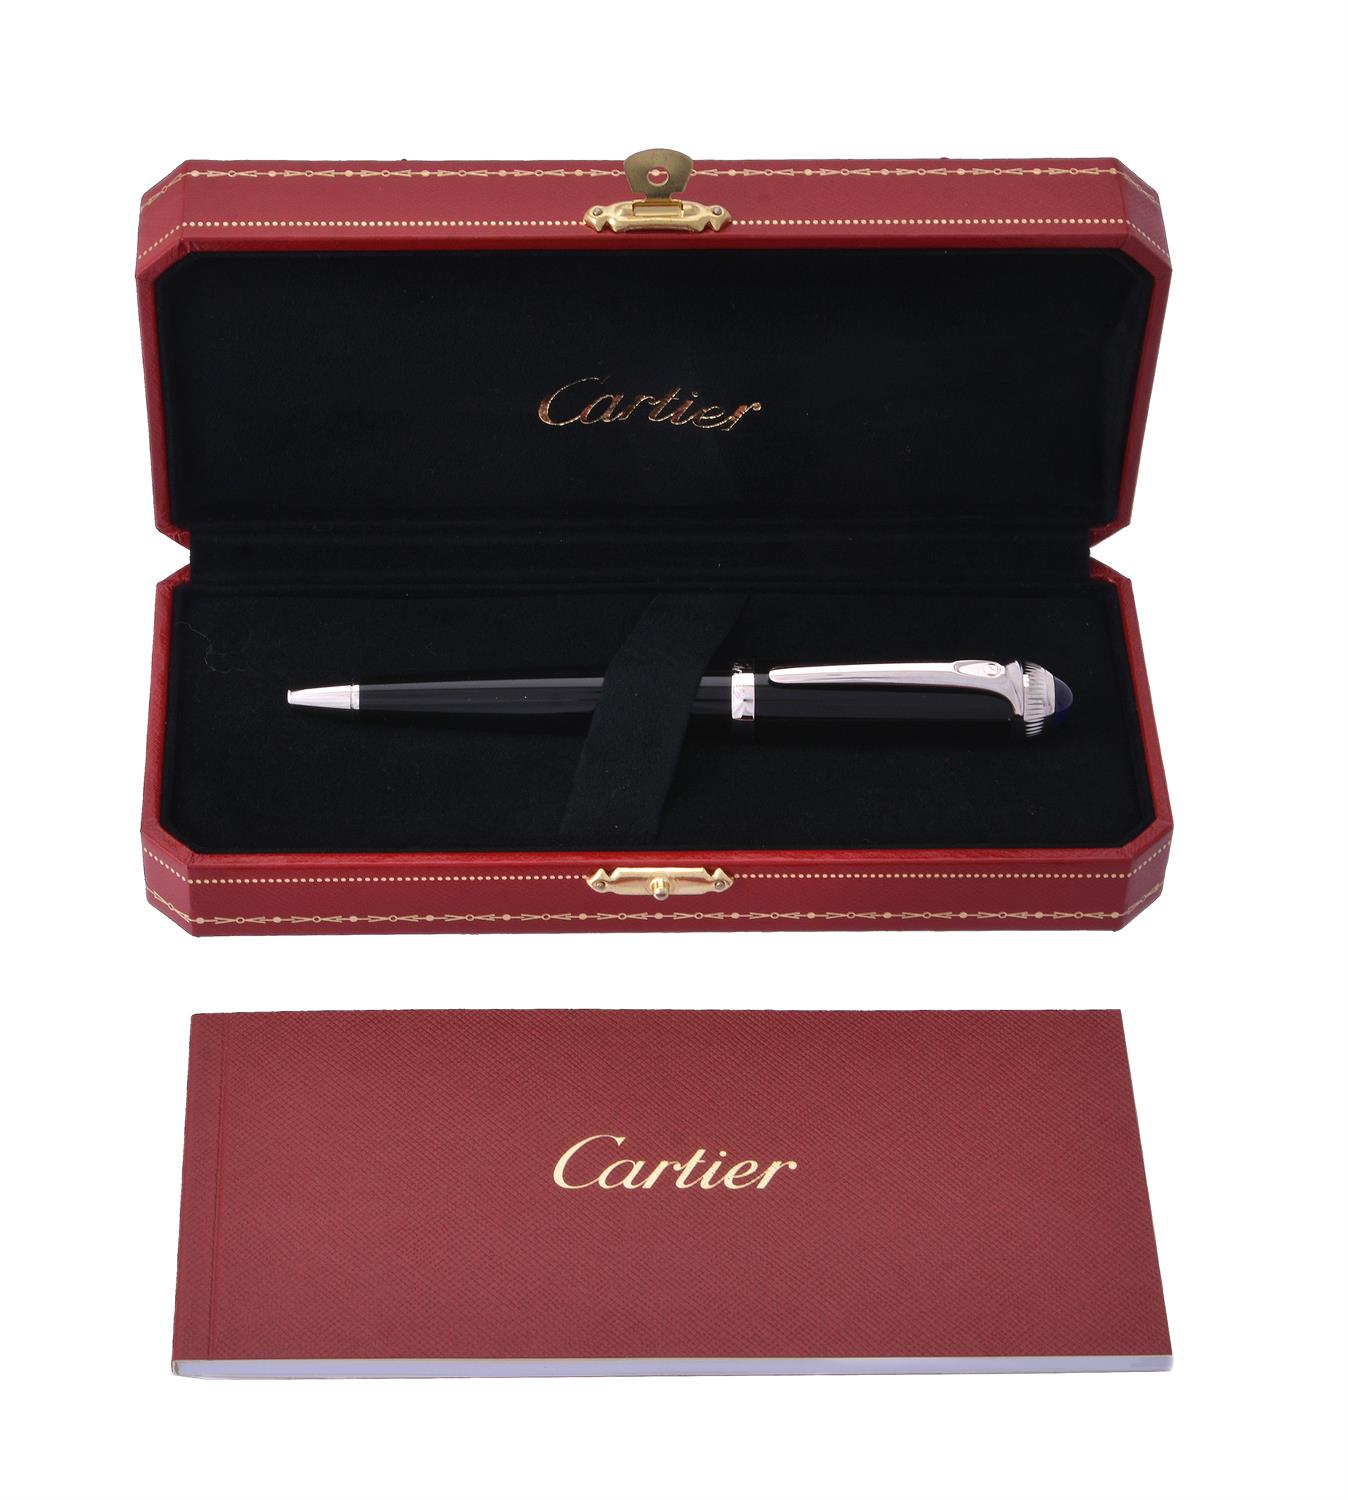 Cartier, R De Cartier, a black ball point pen - Image 2 of 2